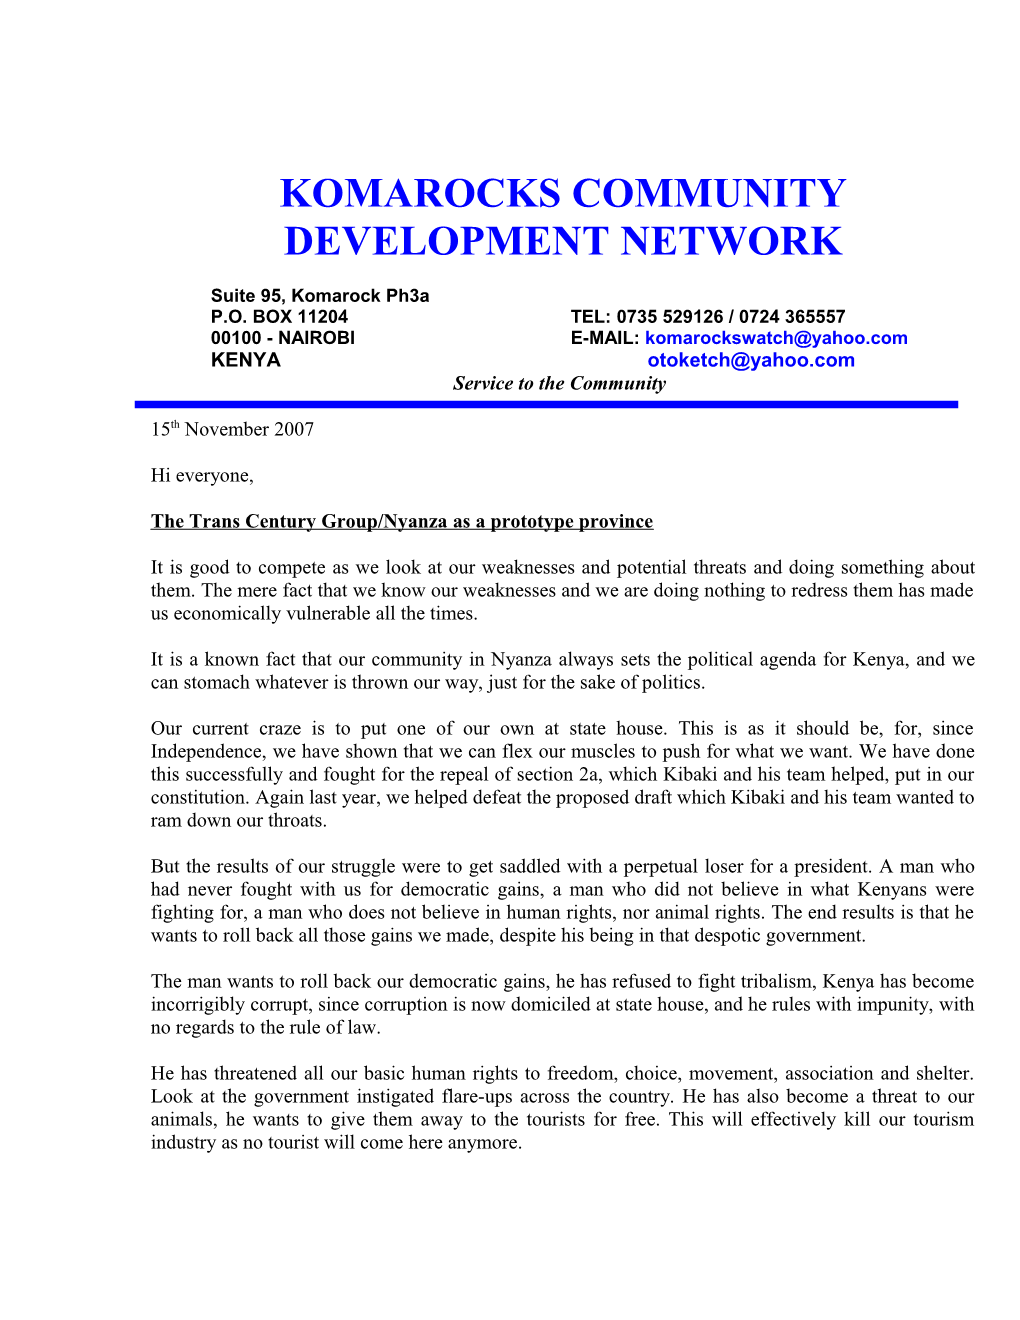 Komarocks Community Development Network